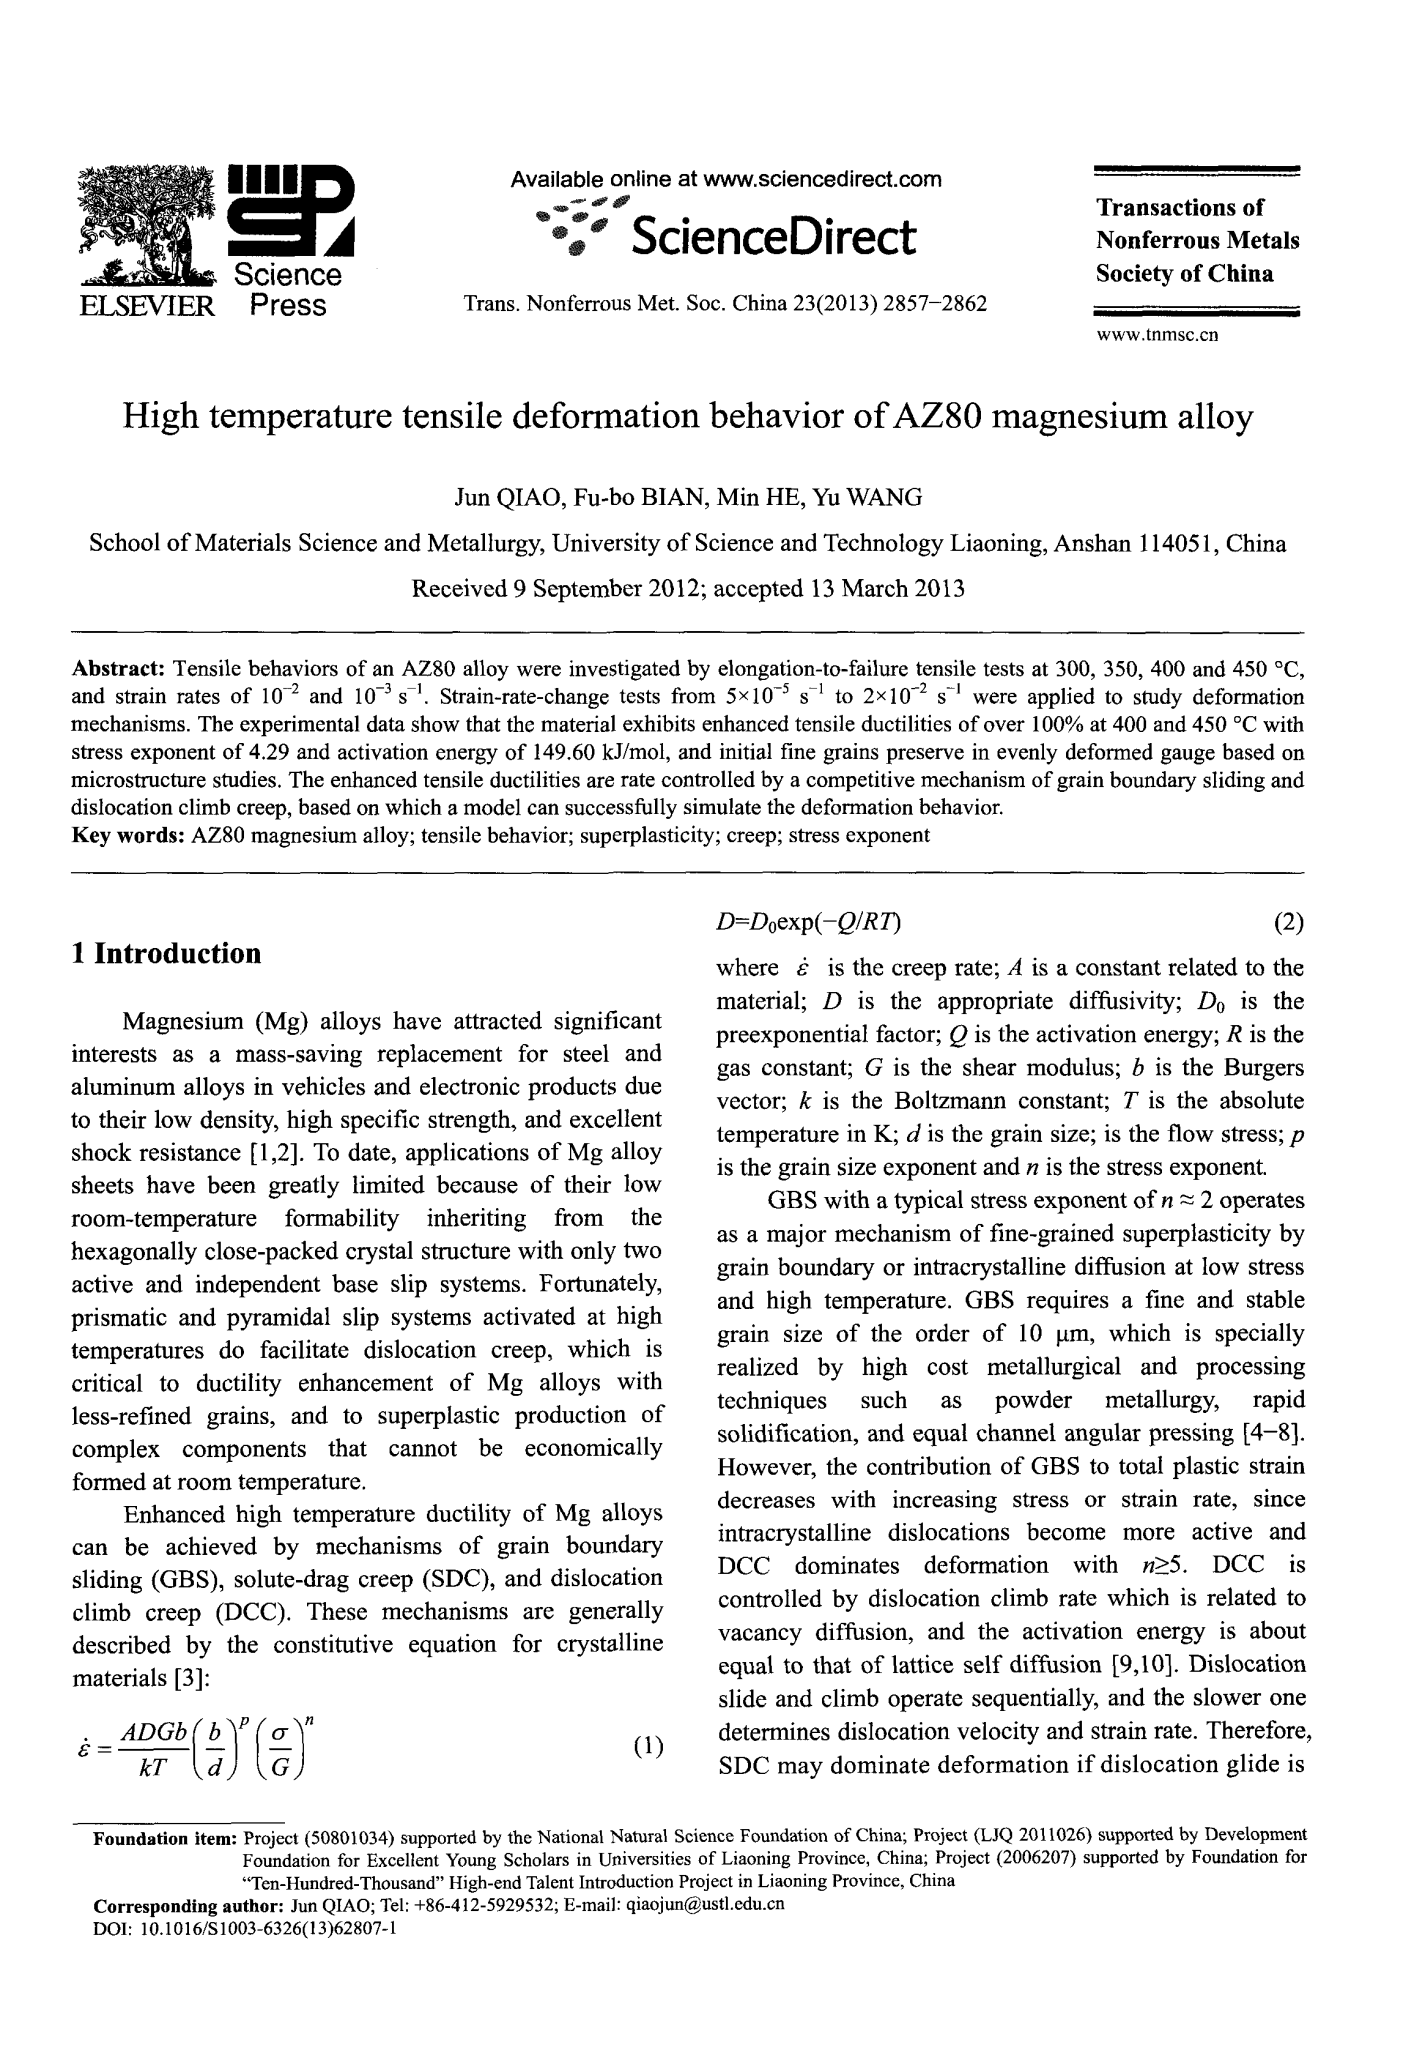 AZ80镁合金的高温拉伸变形行为